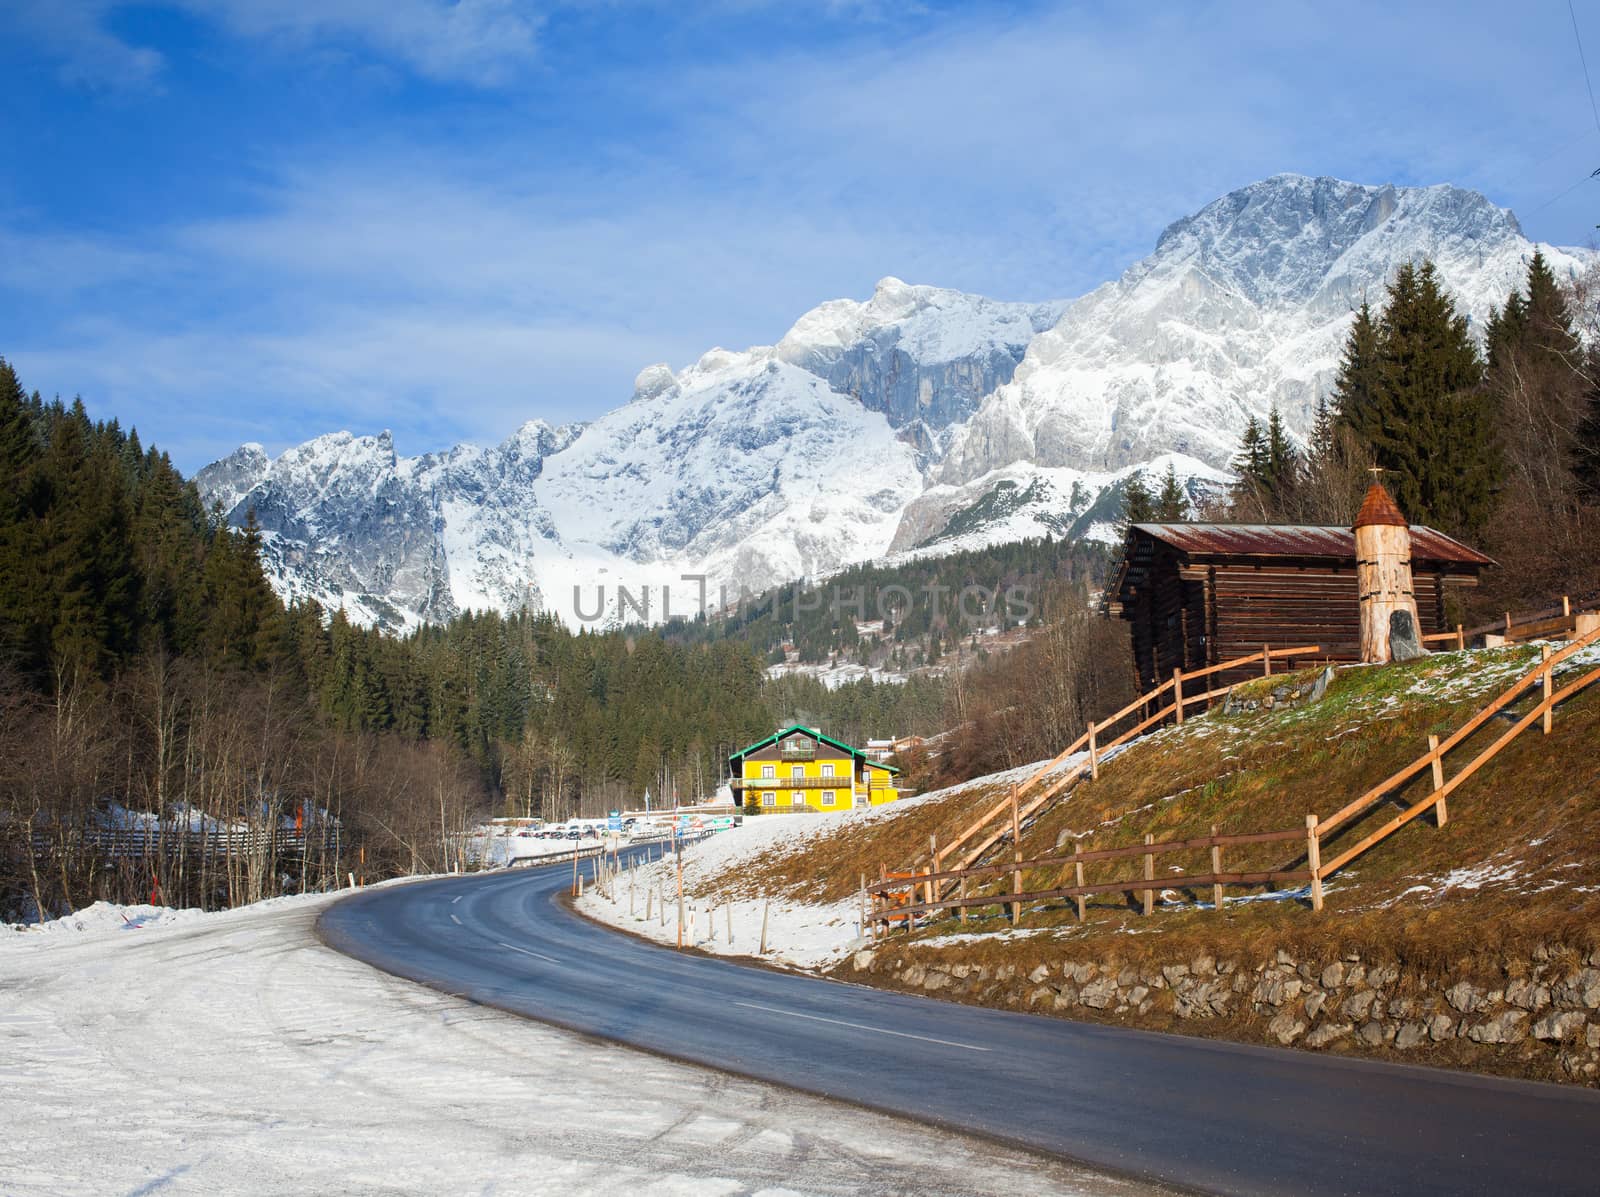 Winter in the Alps, Austria. Horizontal shot